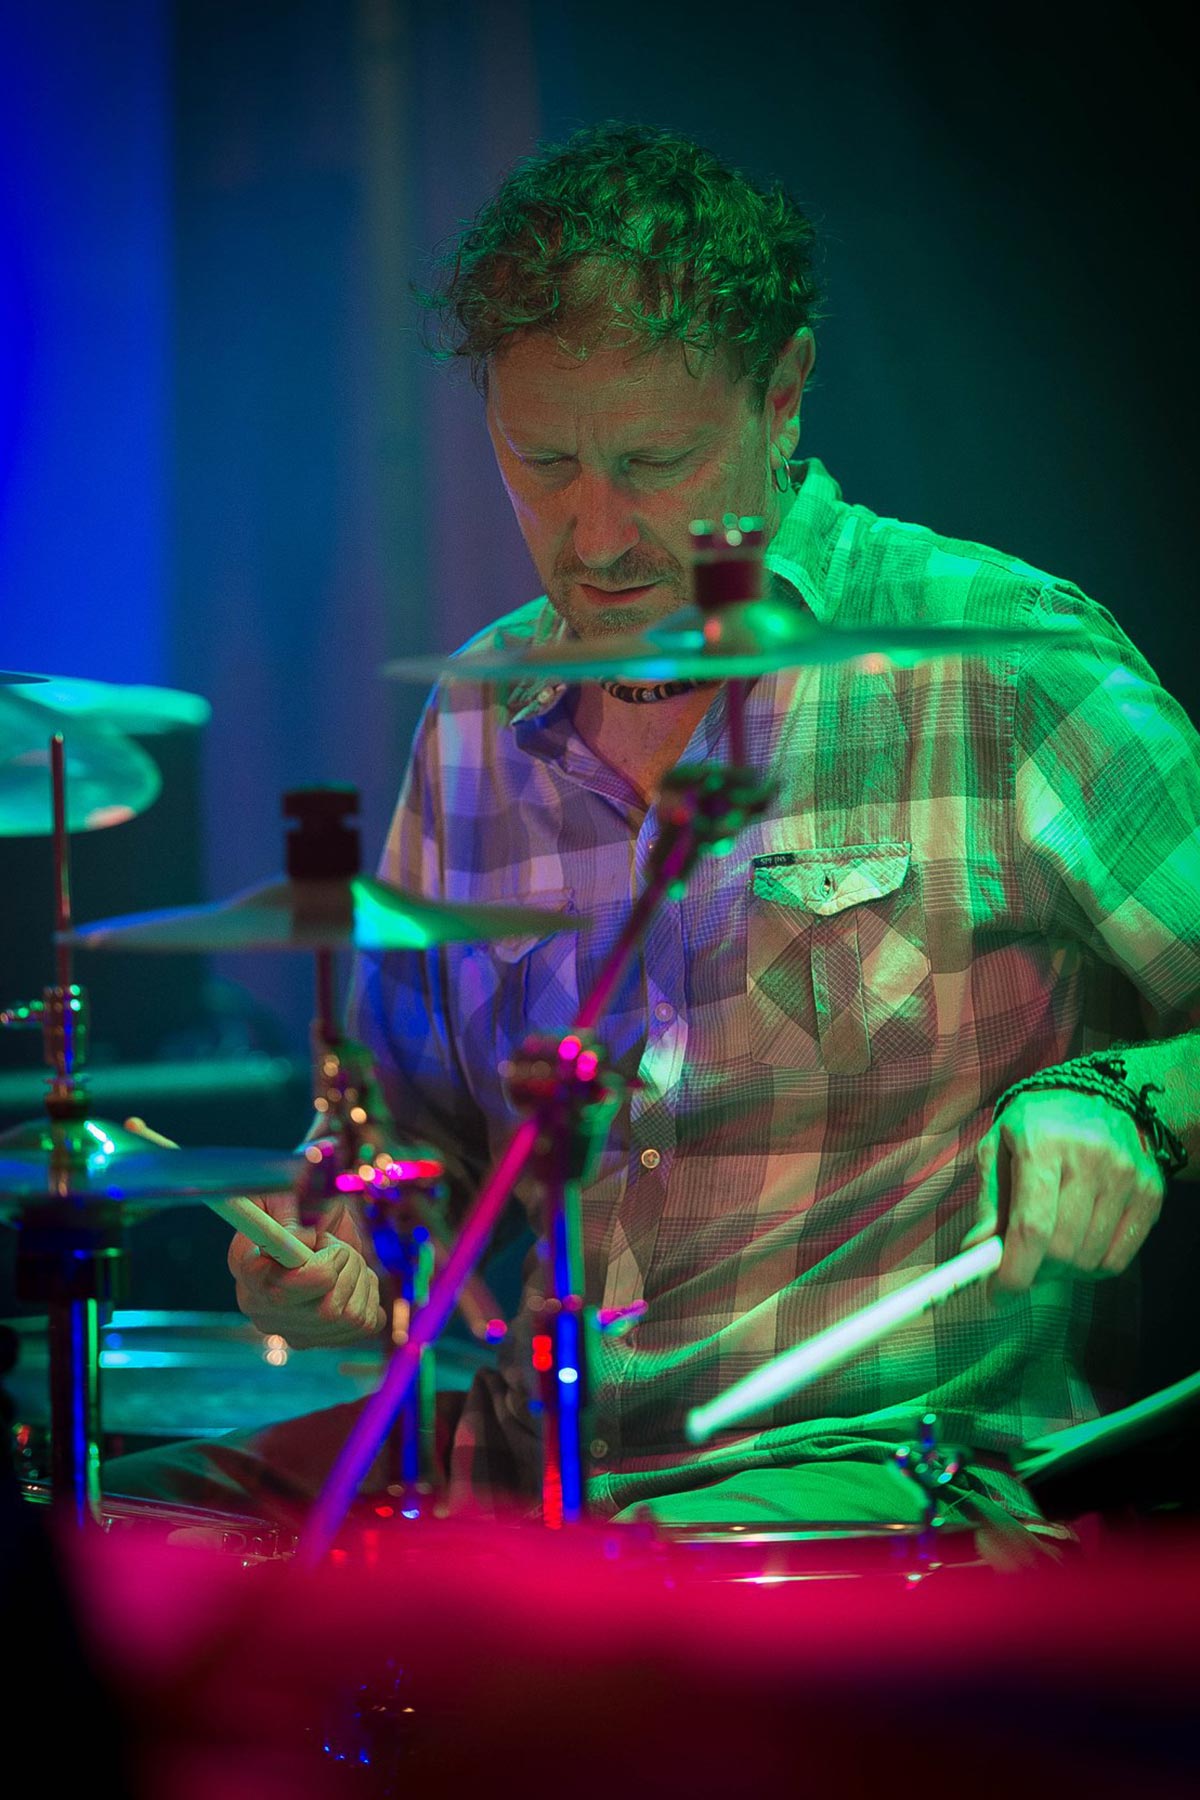 Sebi Ackermann am Schlagzeug